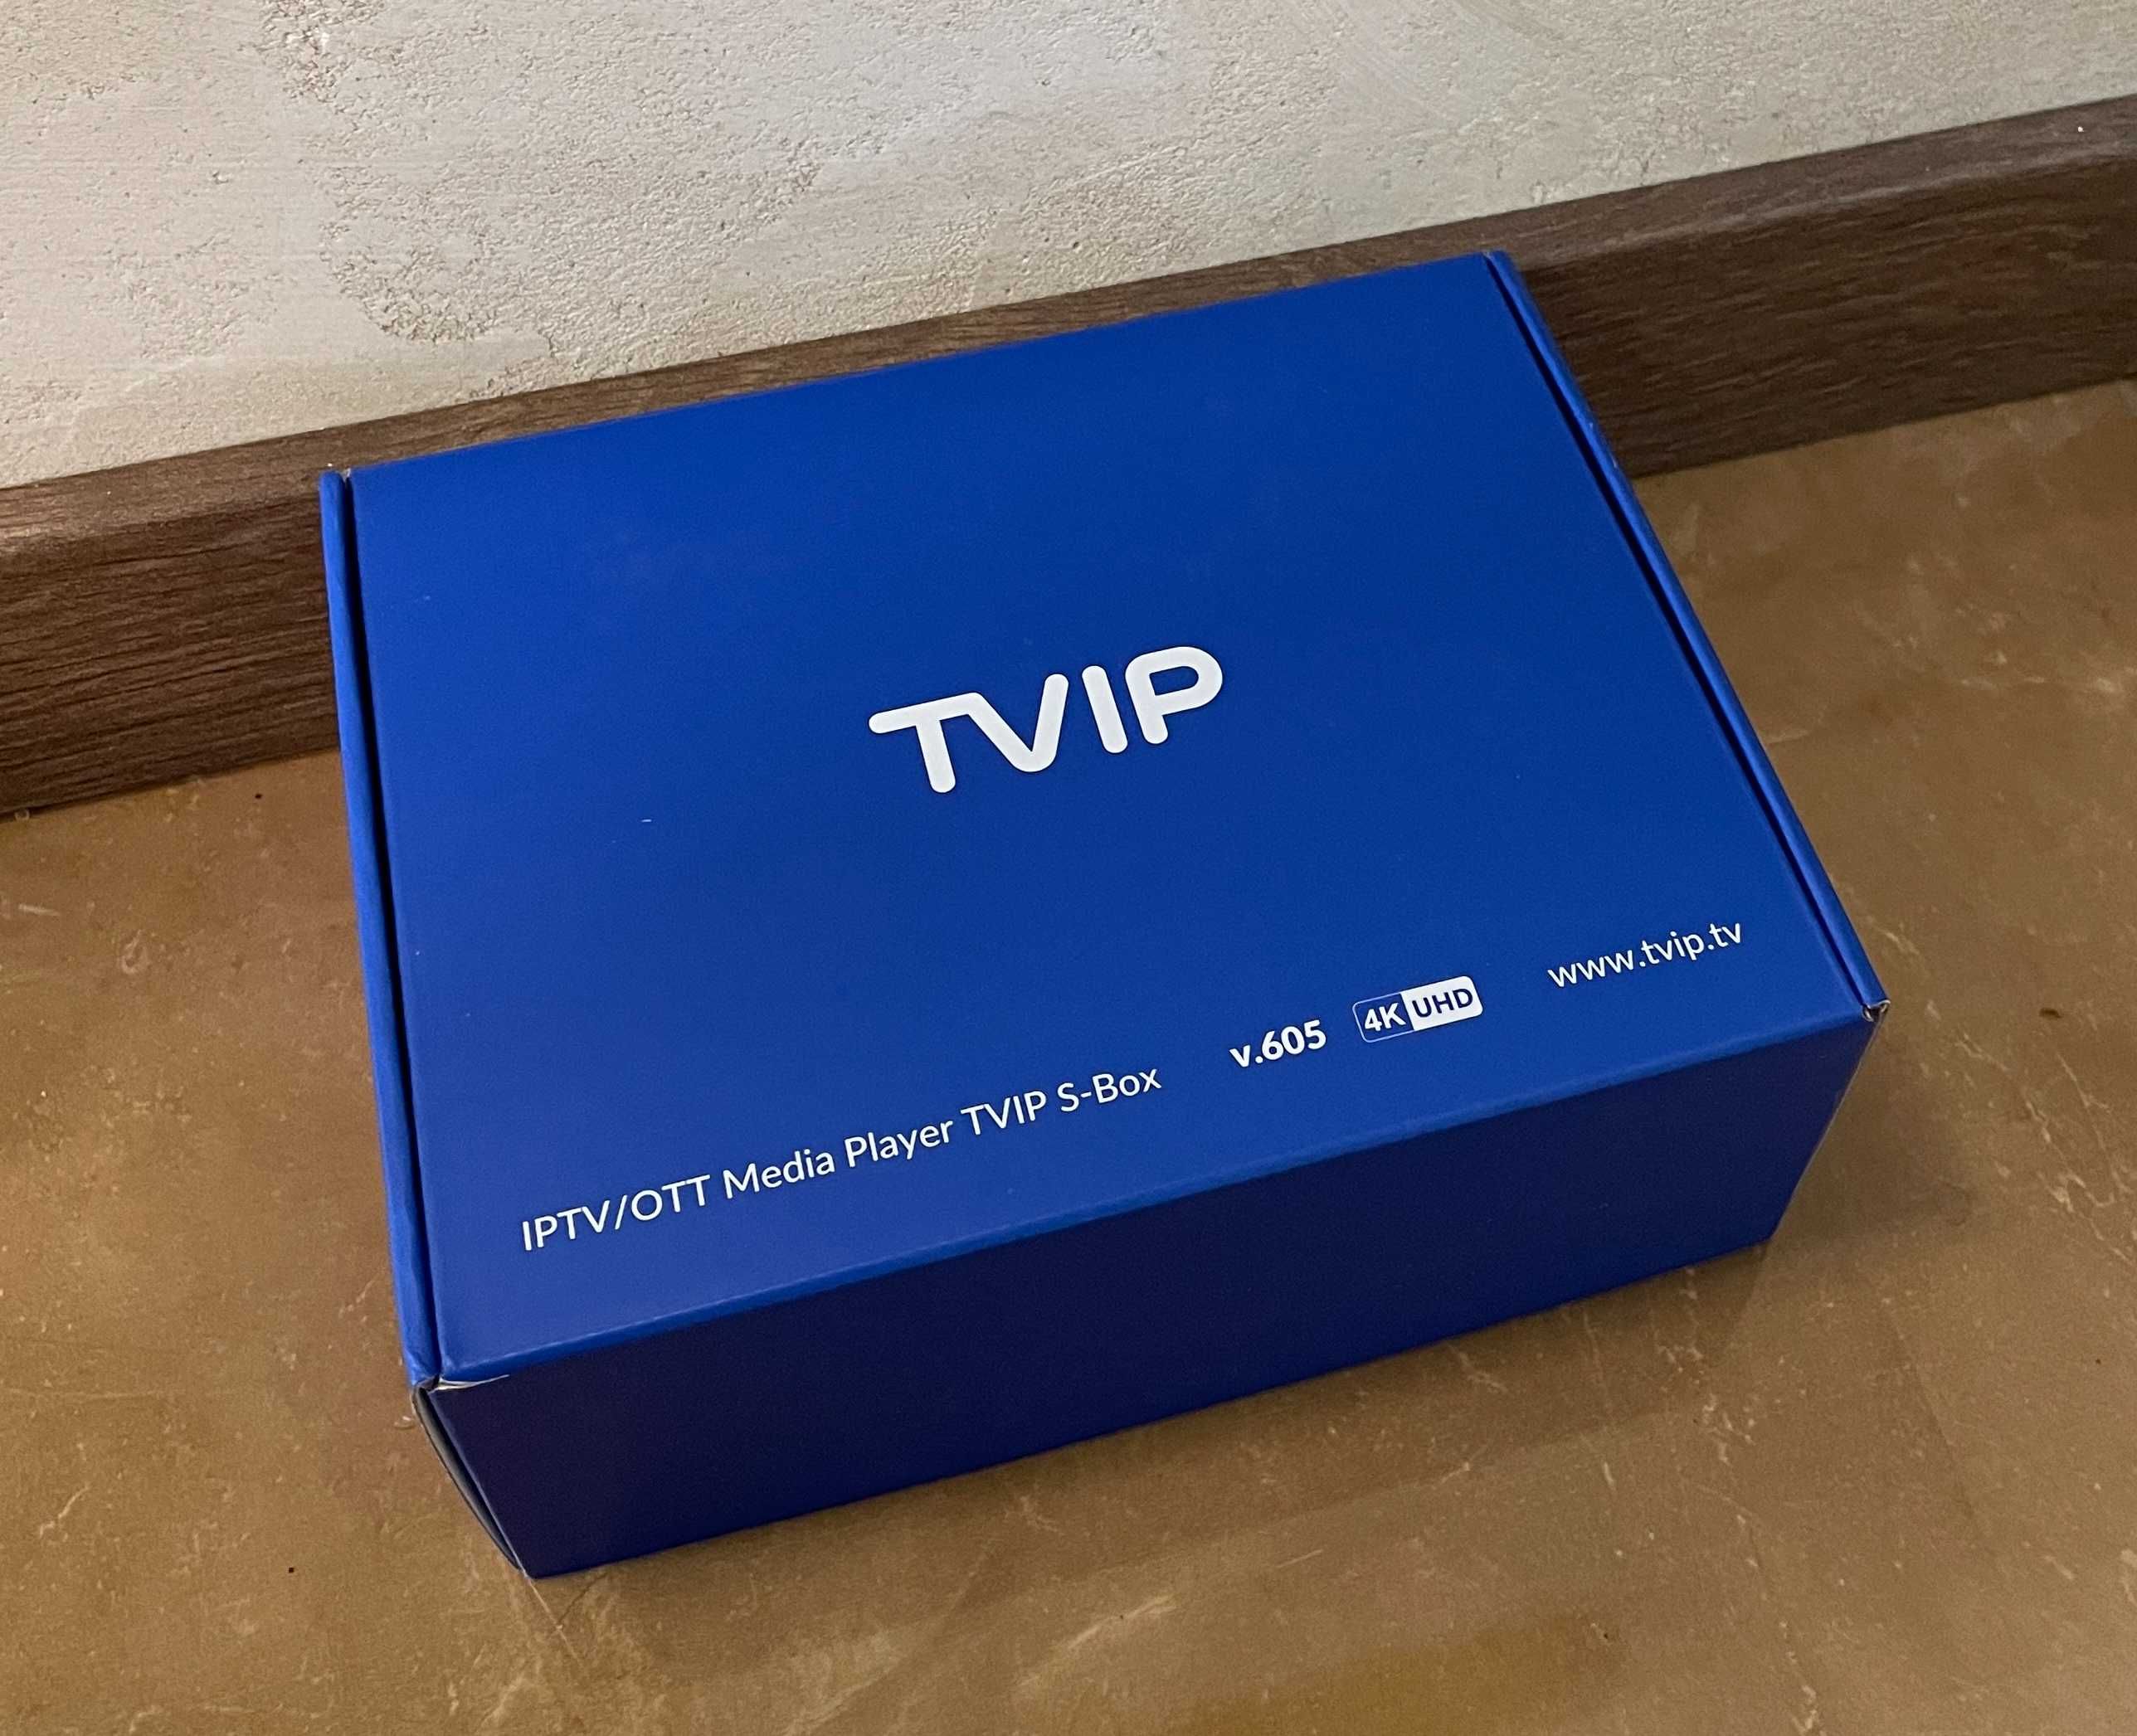 TVIP S-Box v.605 4K